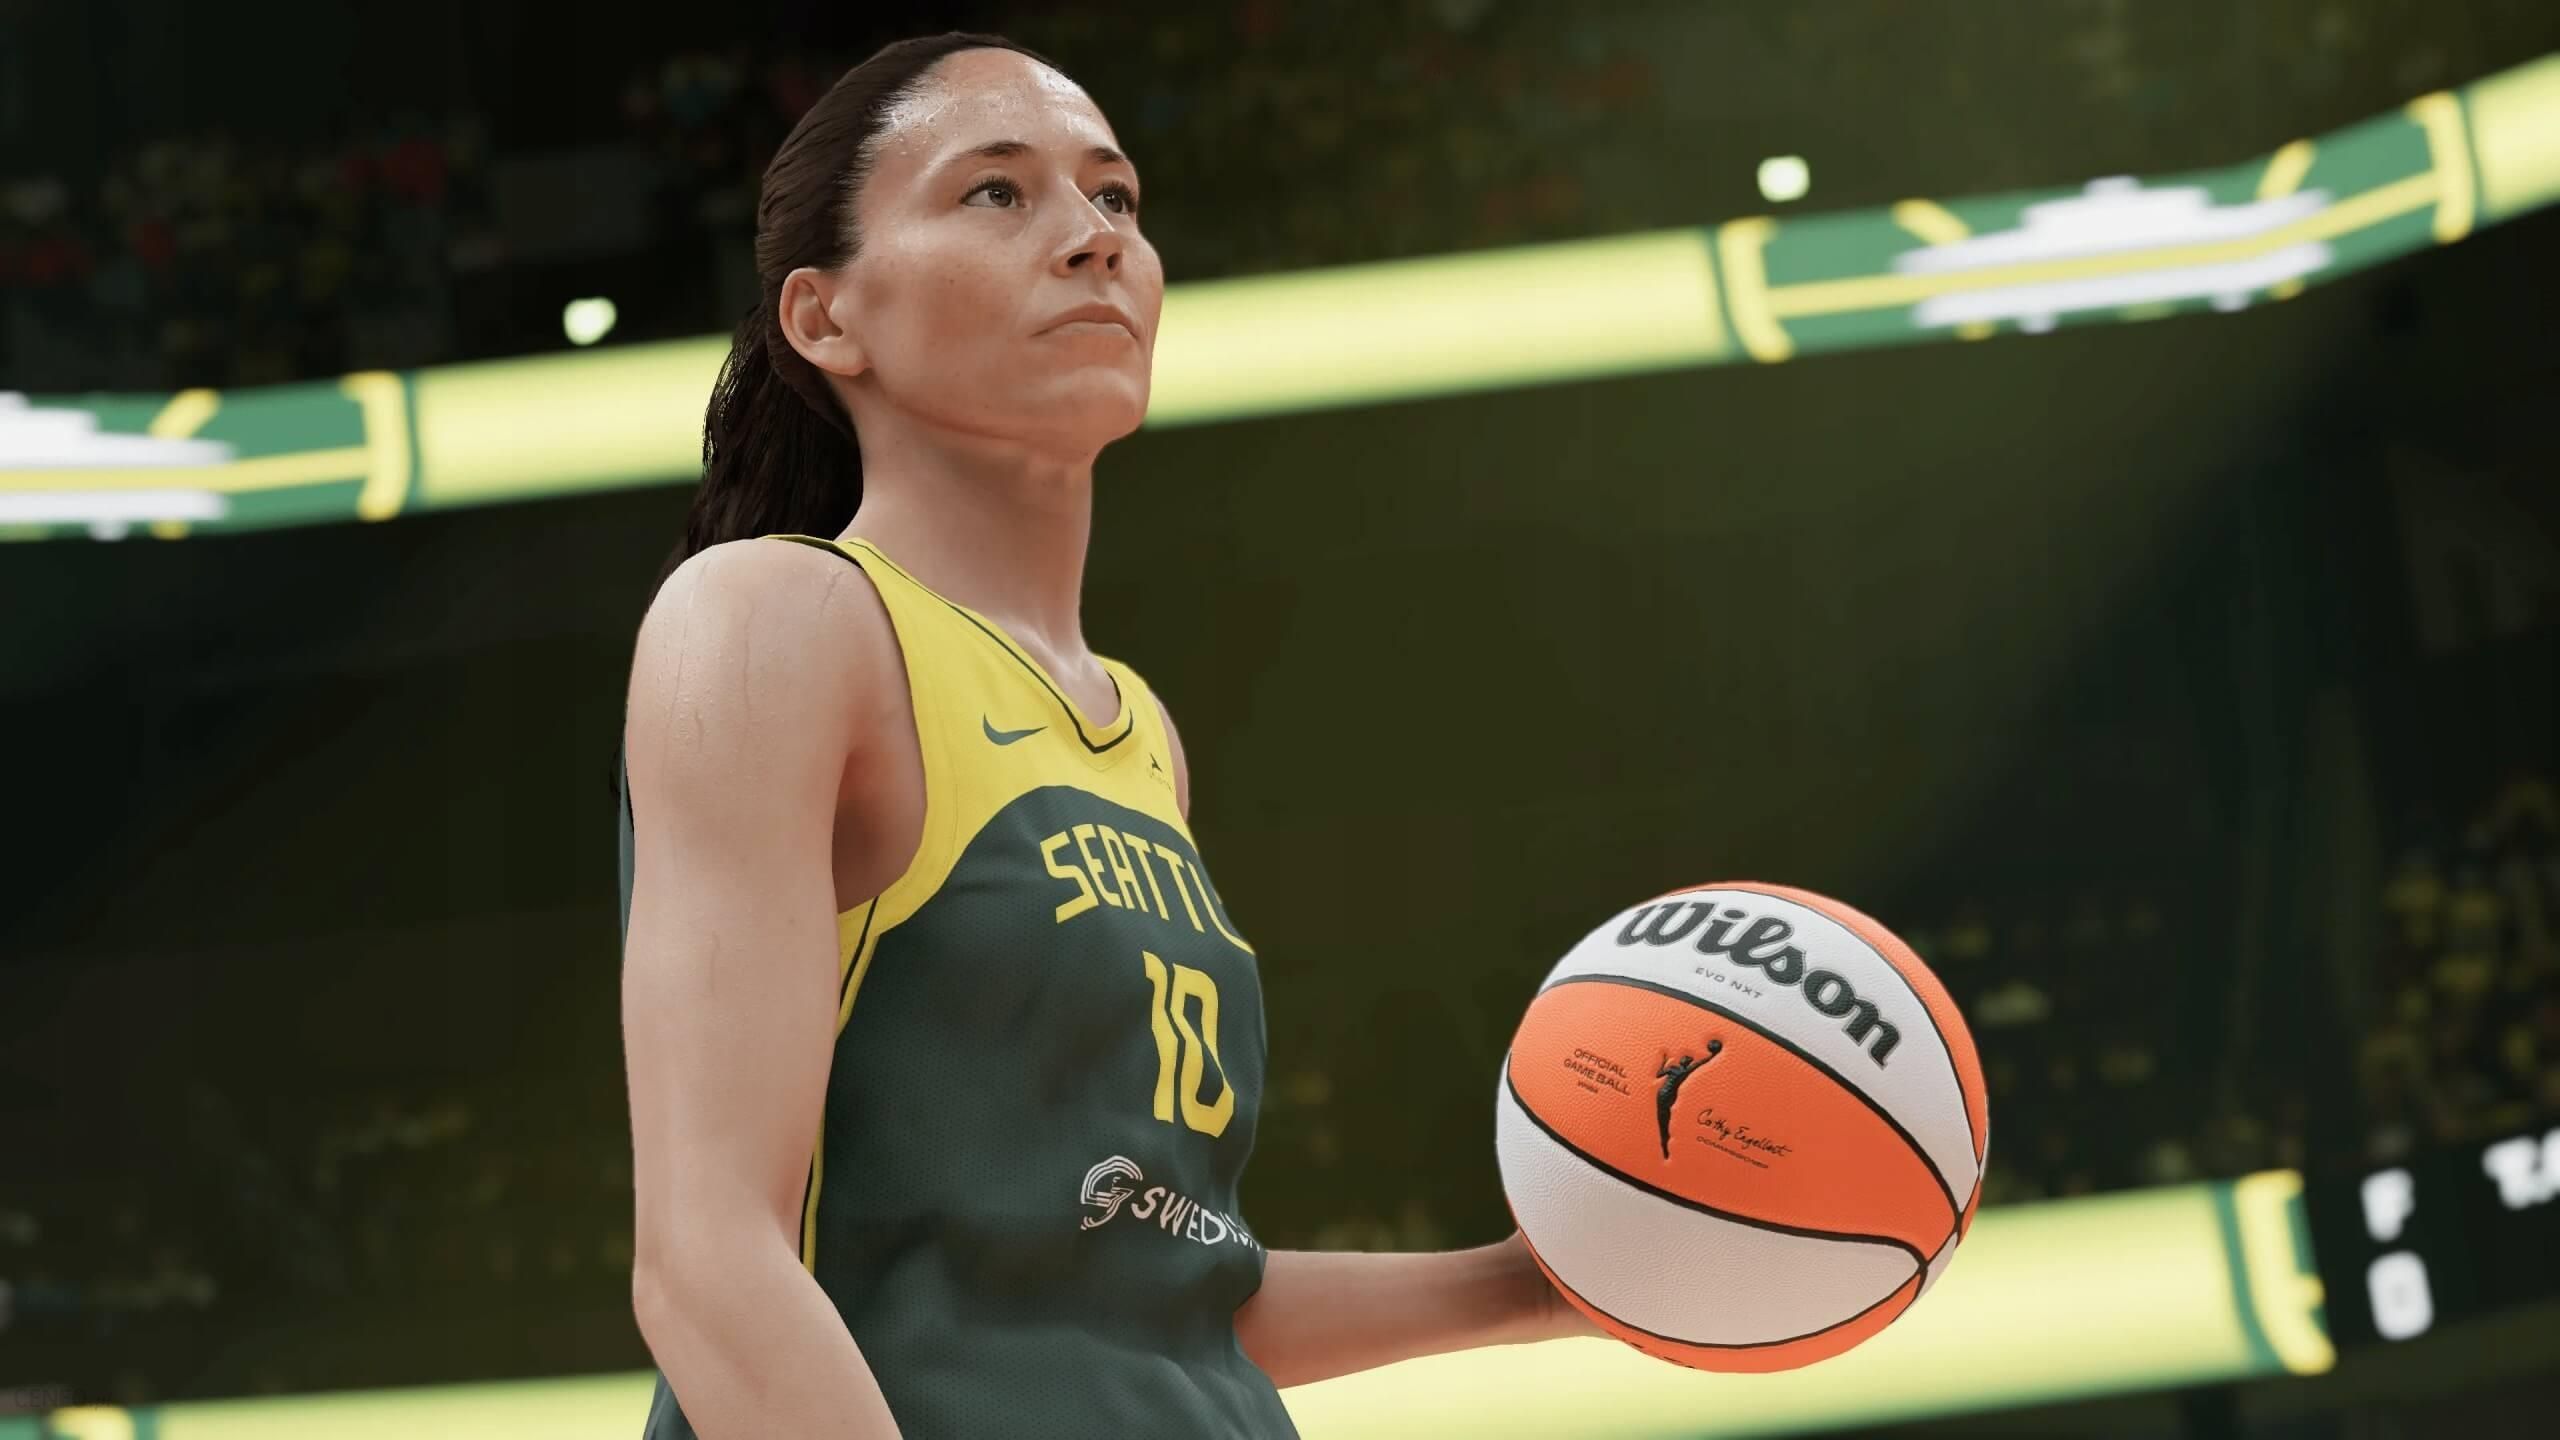 NBA 2K23 (Gra Xbox One)